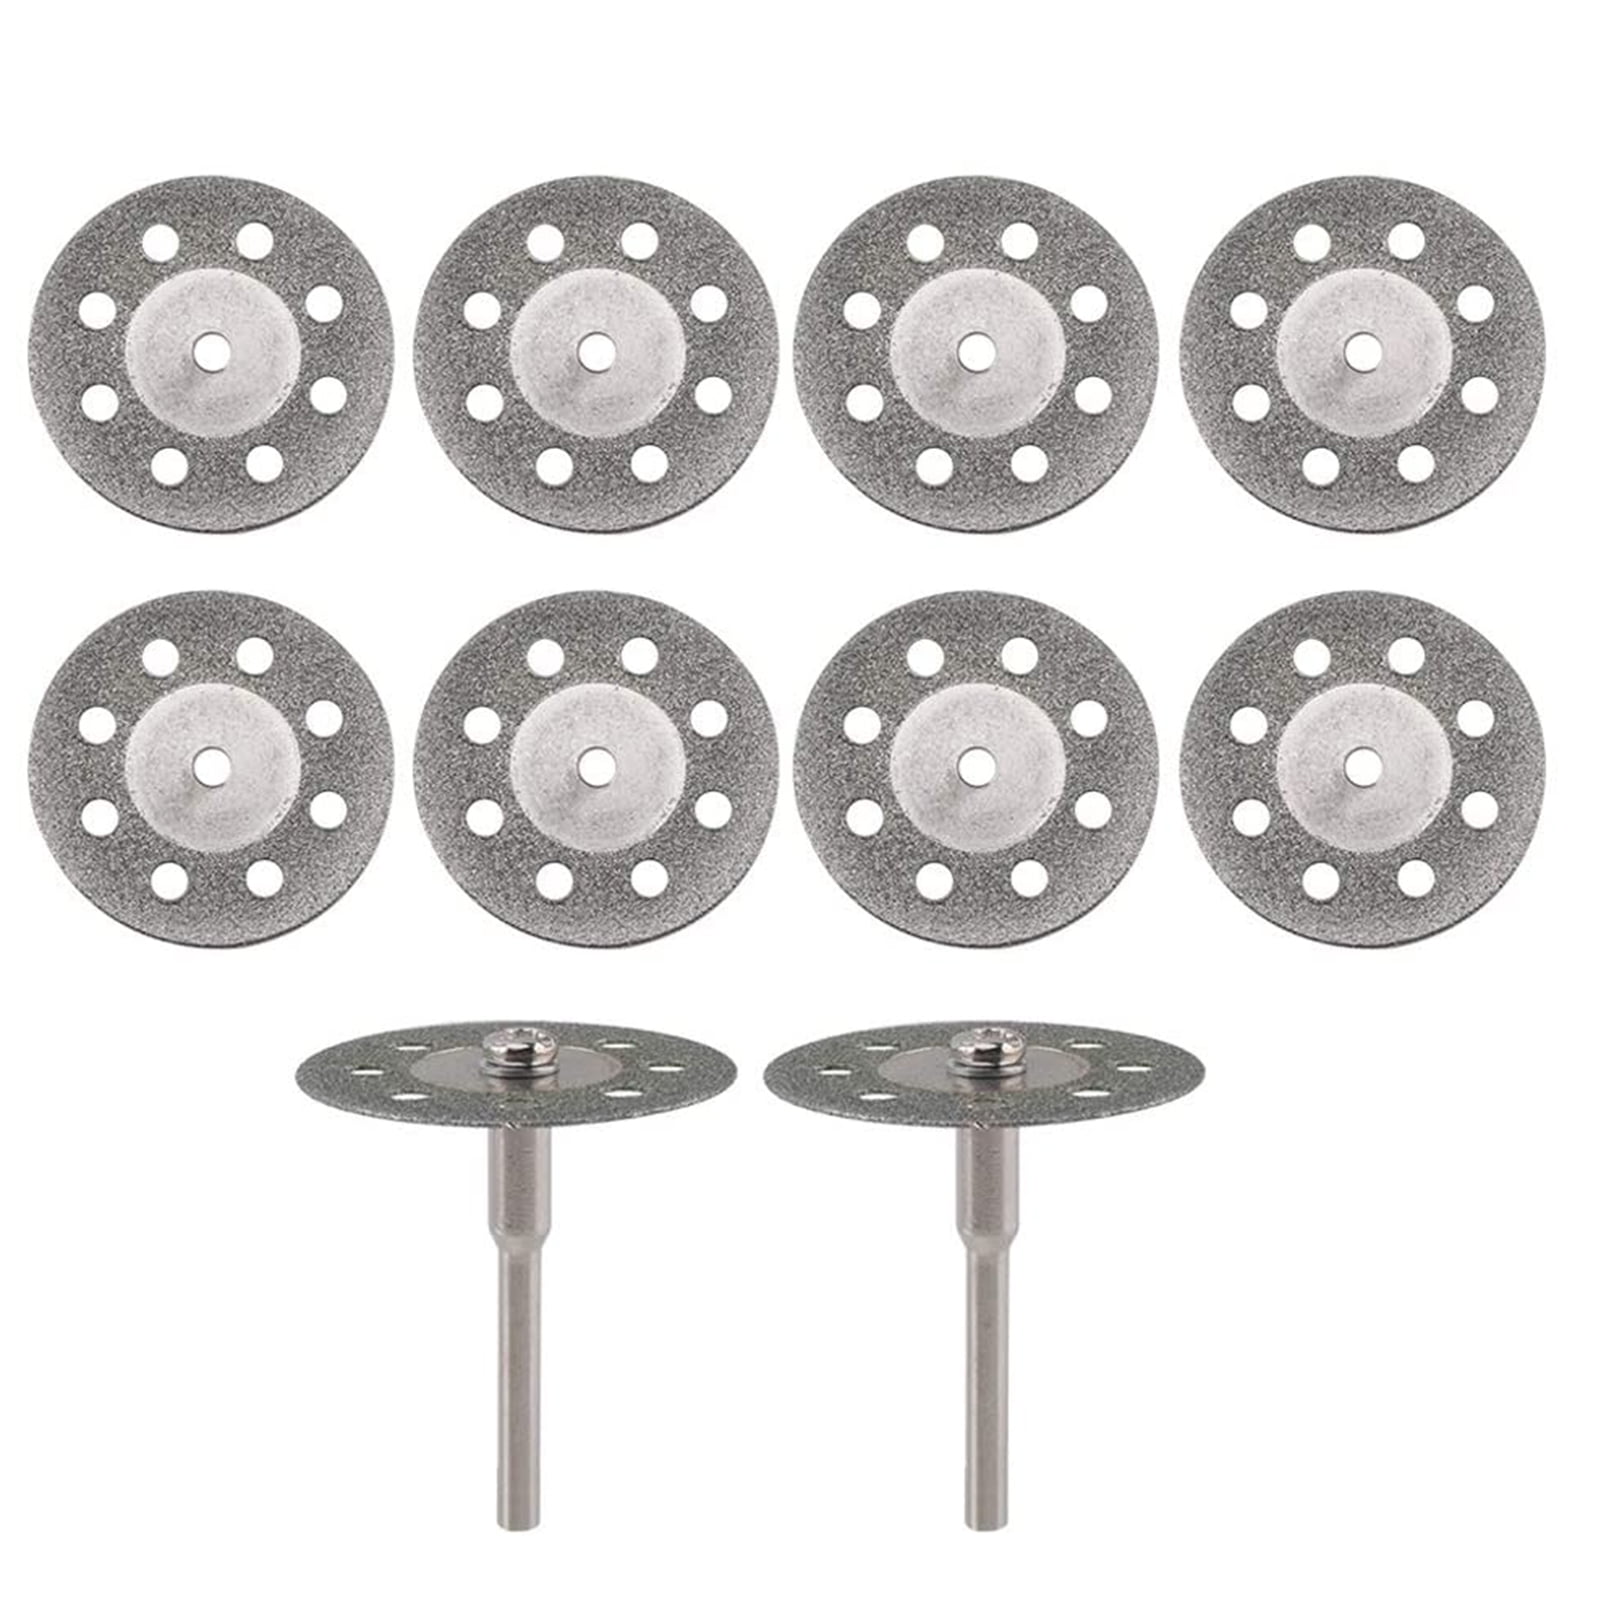 10pcs Mini Diamond Blade Cutting Disc Rotary Wheel Grinding & 2 Mandrel Dremmel